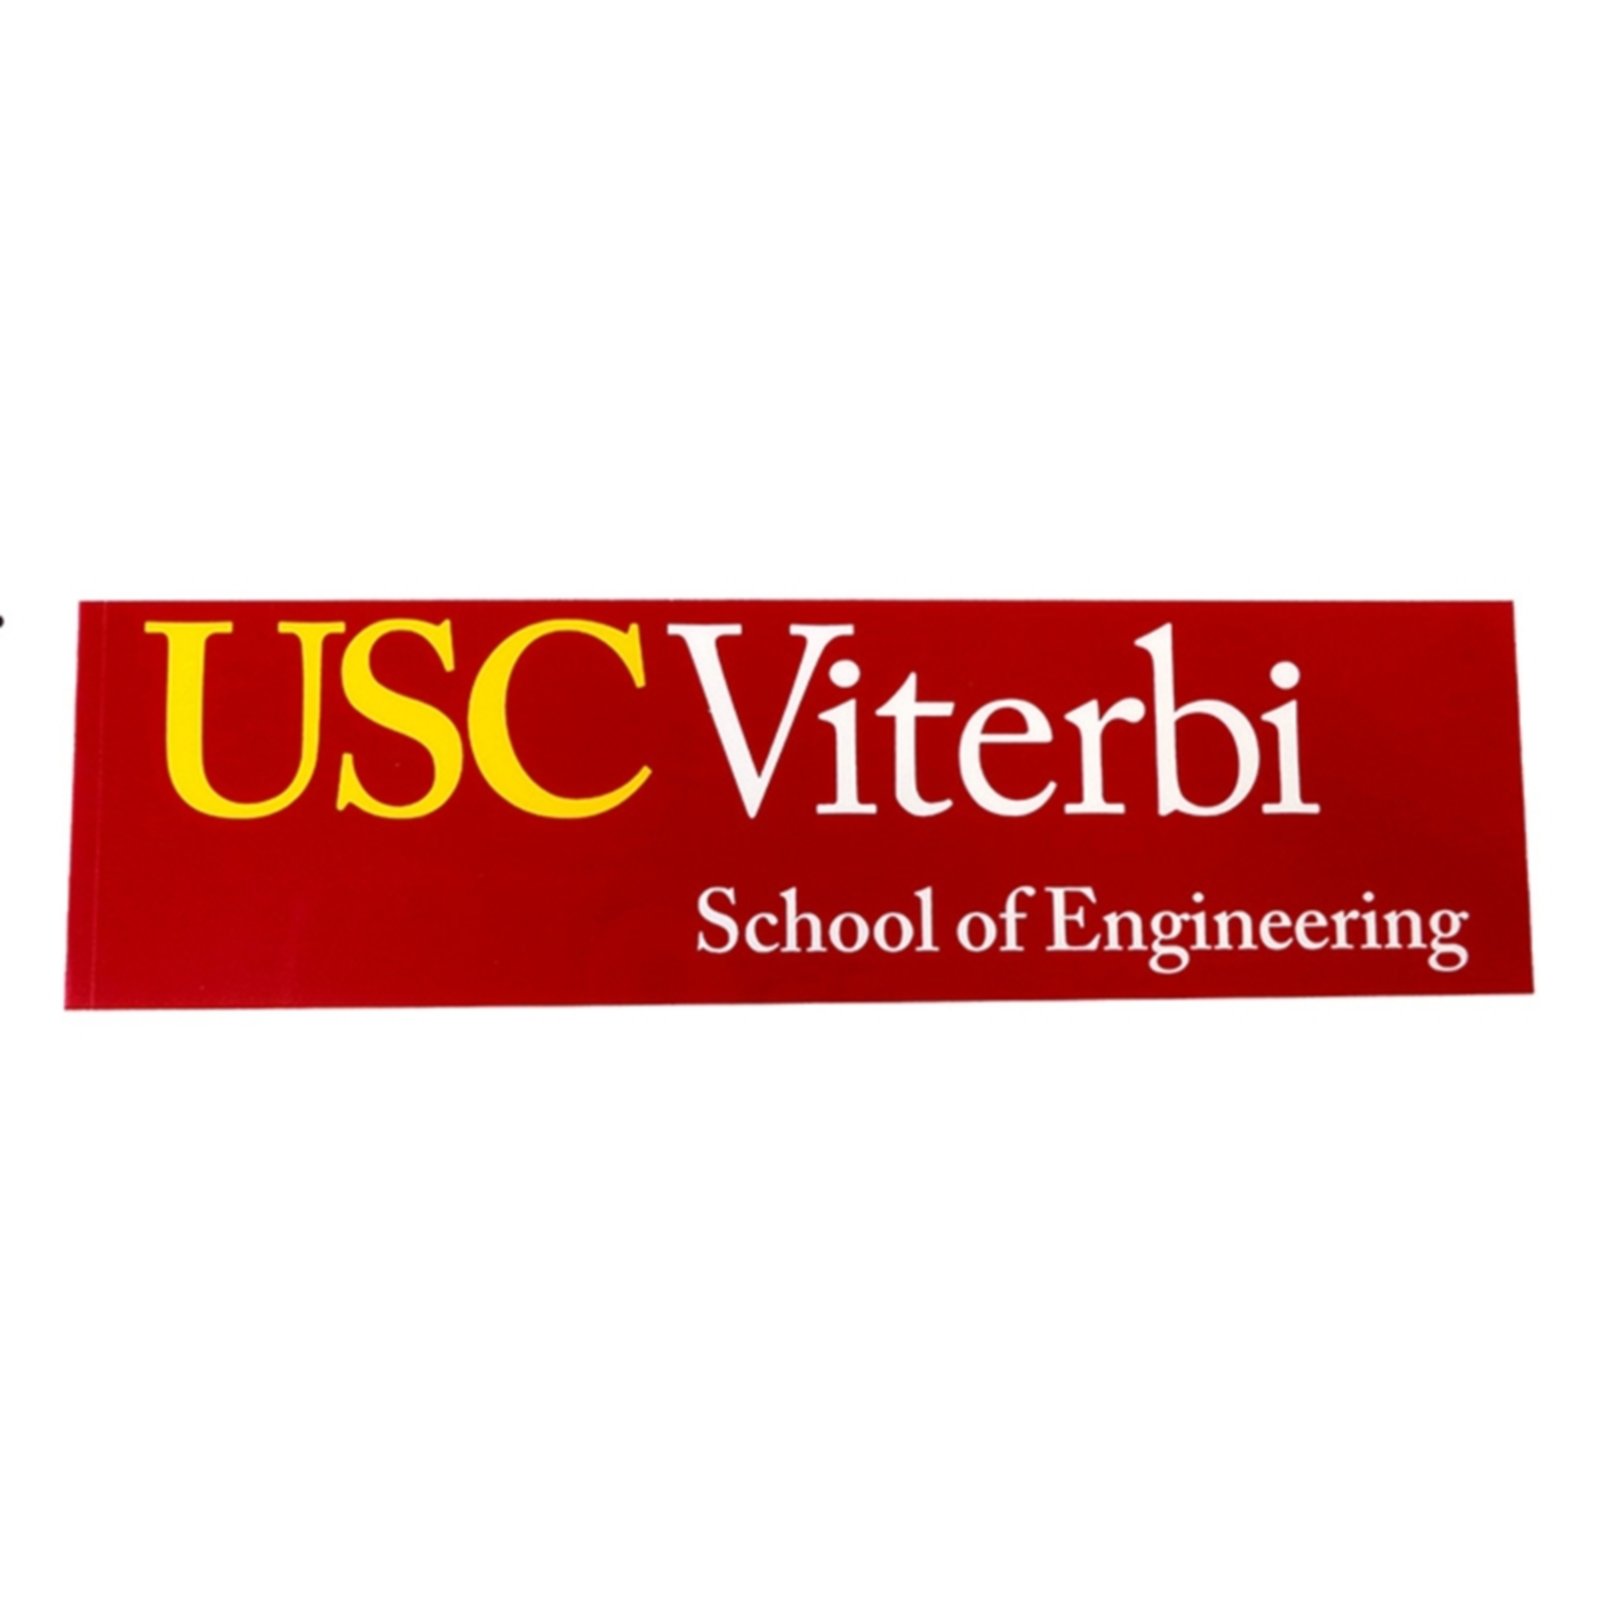 USC Viterbi School of Engineering Decal image01